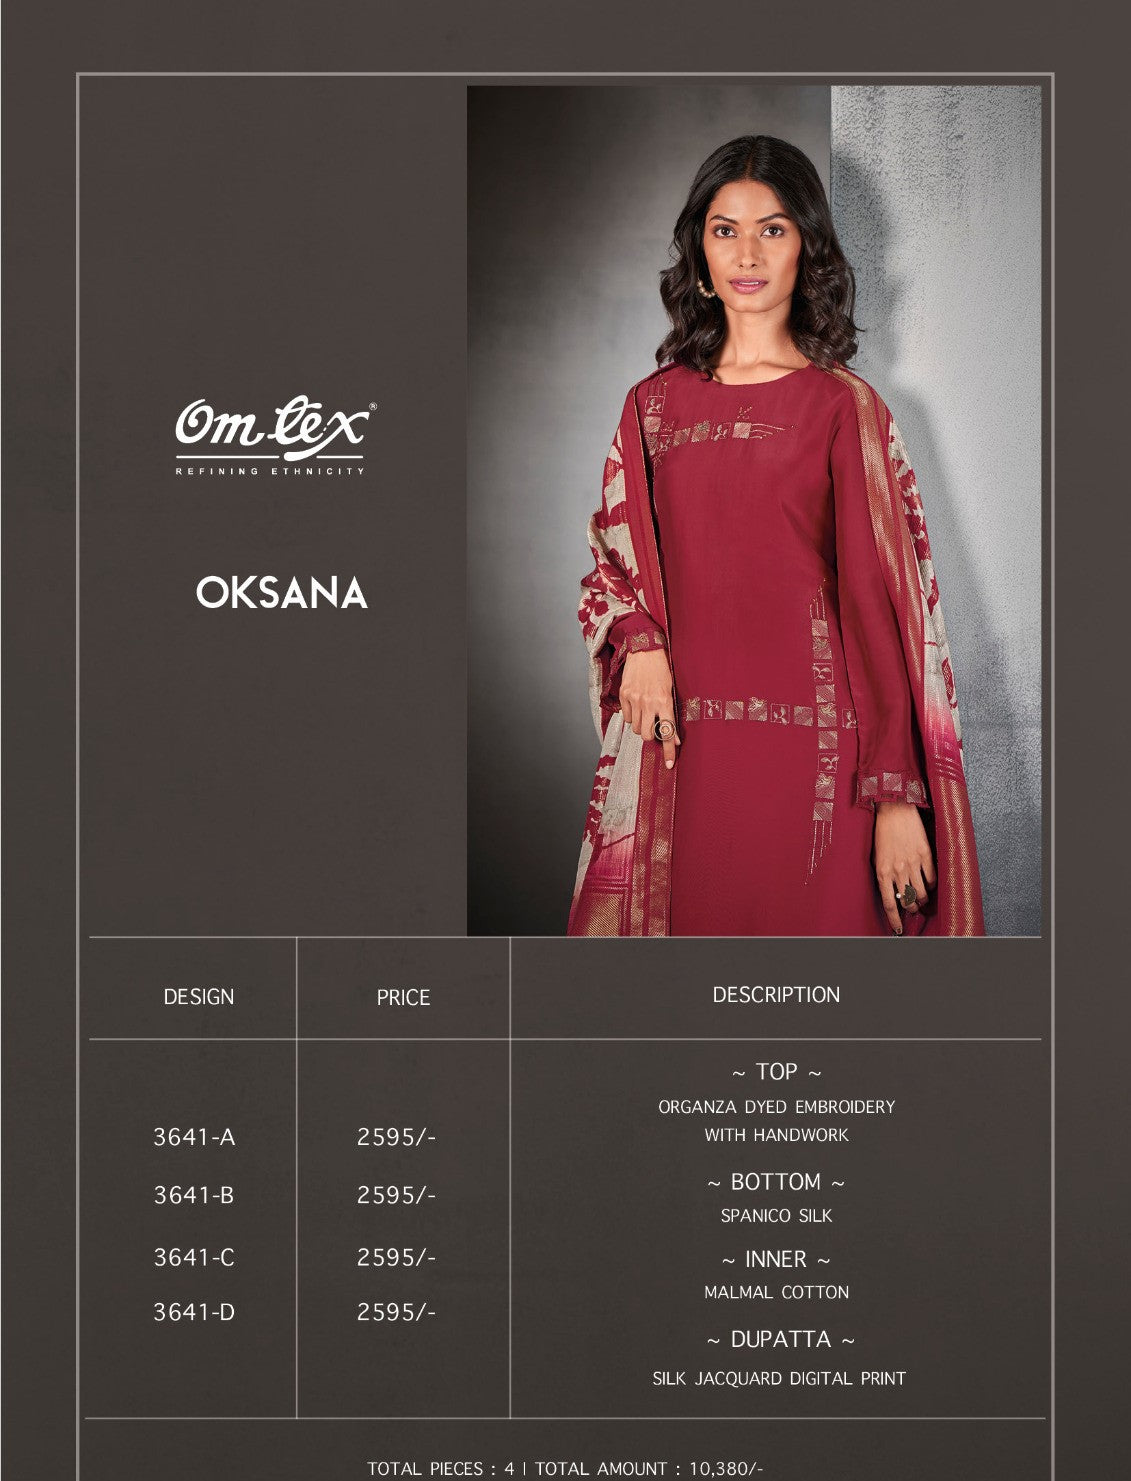 Oksana Omtex Organza Pant Style Suits